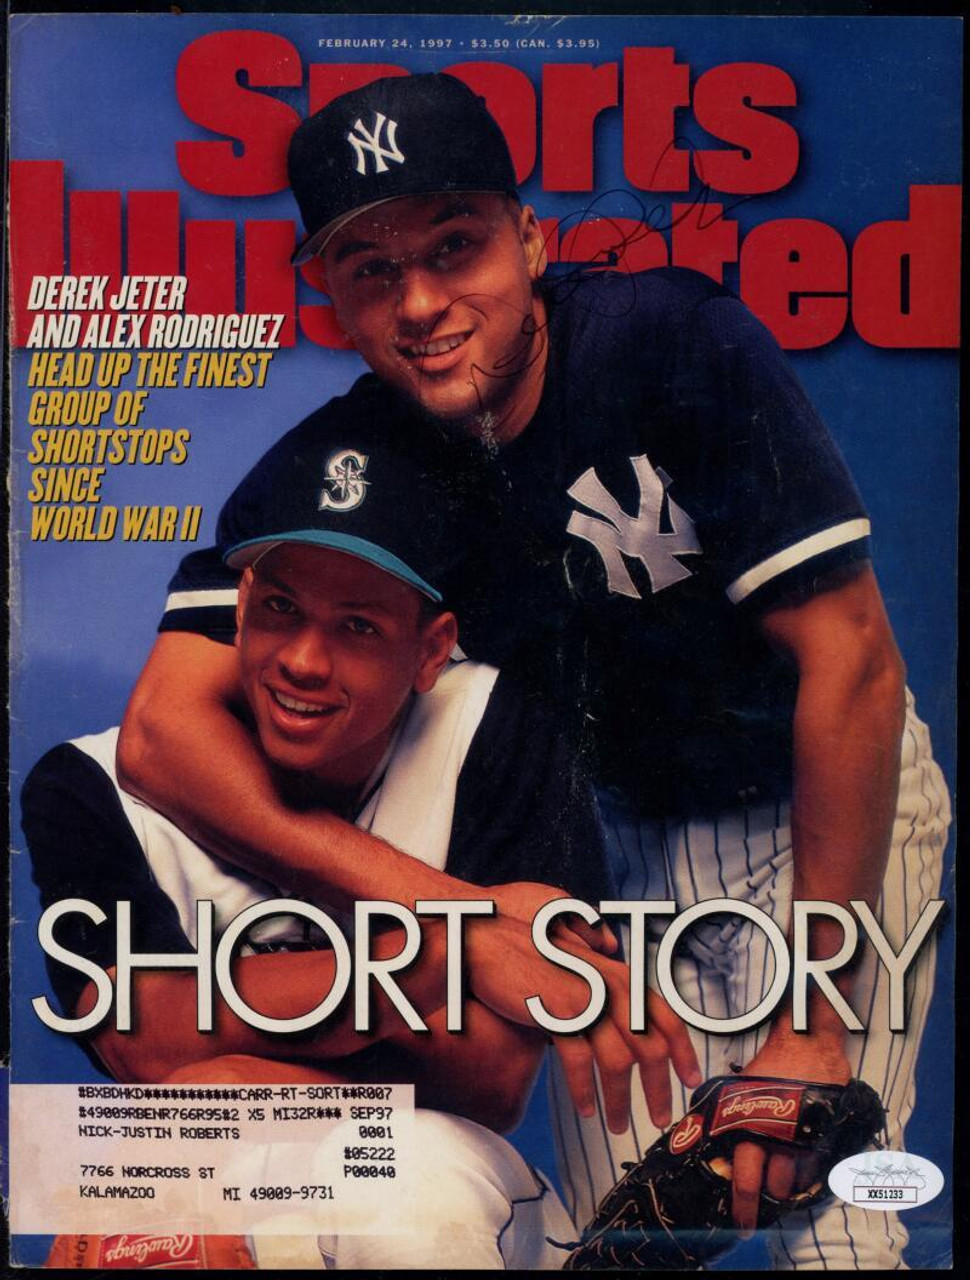 Derek Jeter Autographed Sports Illustrated Cover Page Feb 1997 JSA